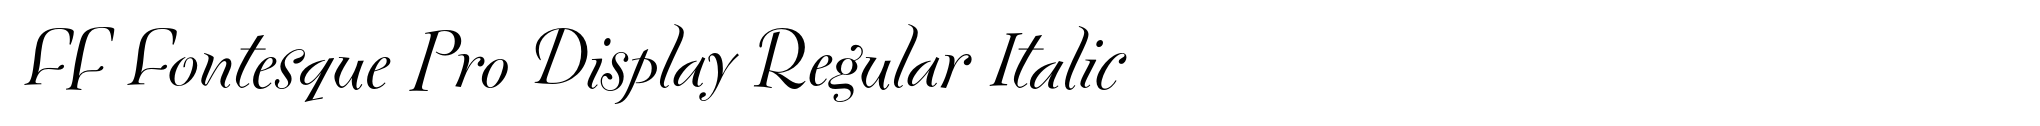 FF Fontesque Pro Display Regular Italic image